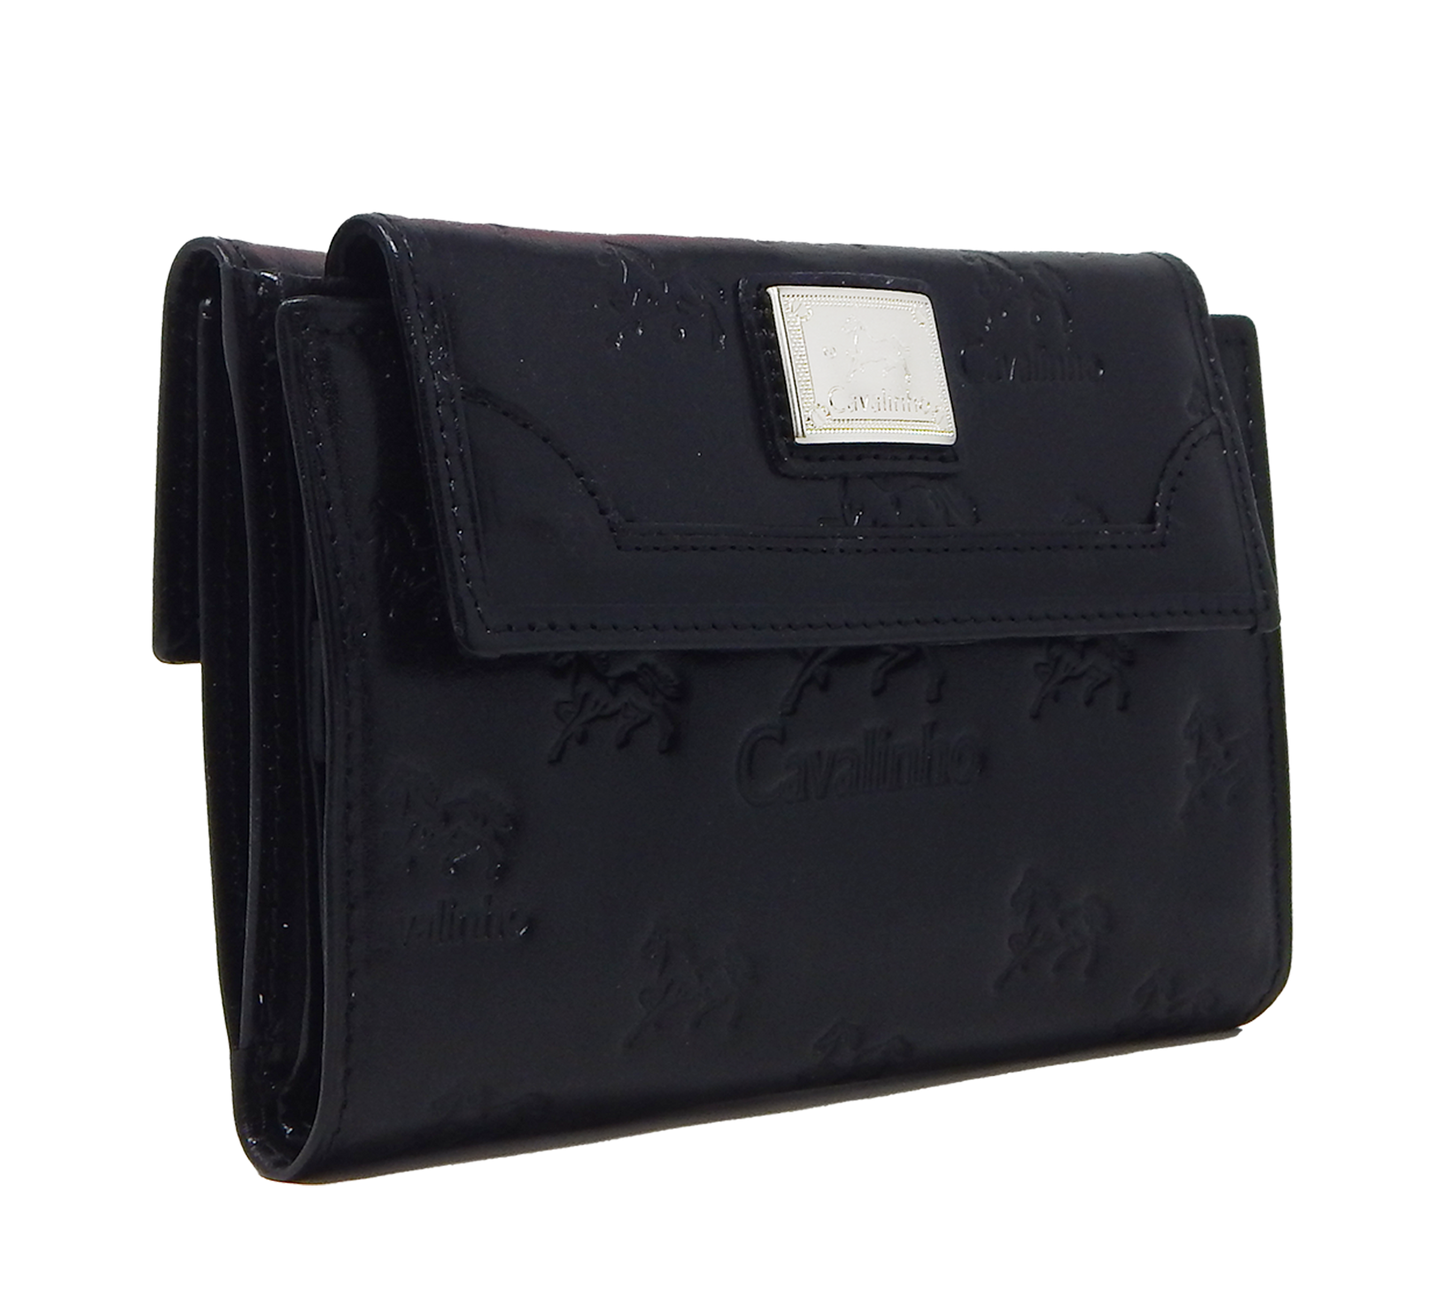 Cavalinho Cavalo Lusitano Leather Wallet - Black - 28090204_01_a_1